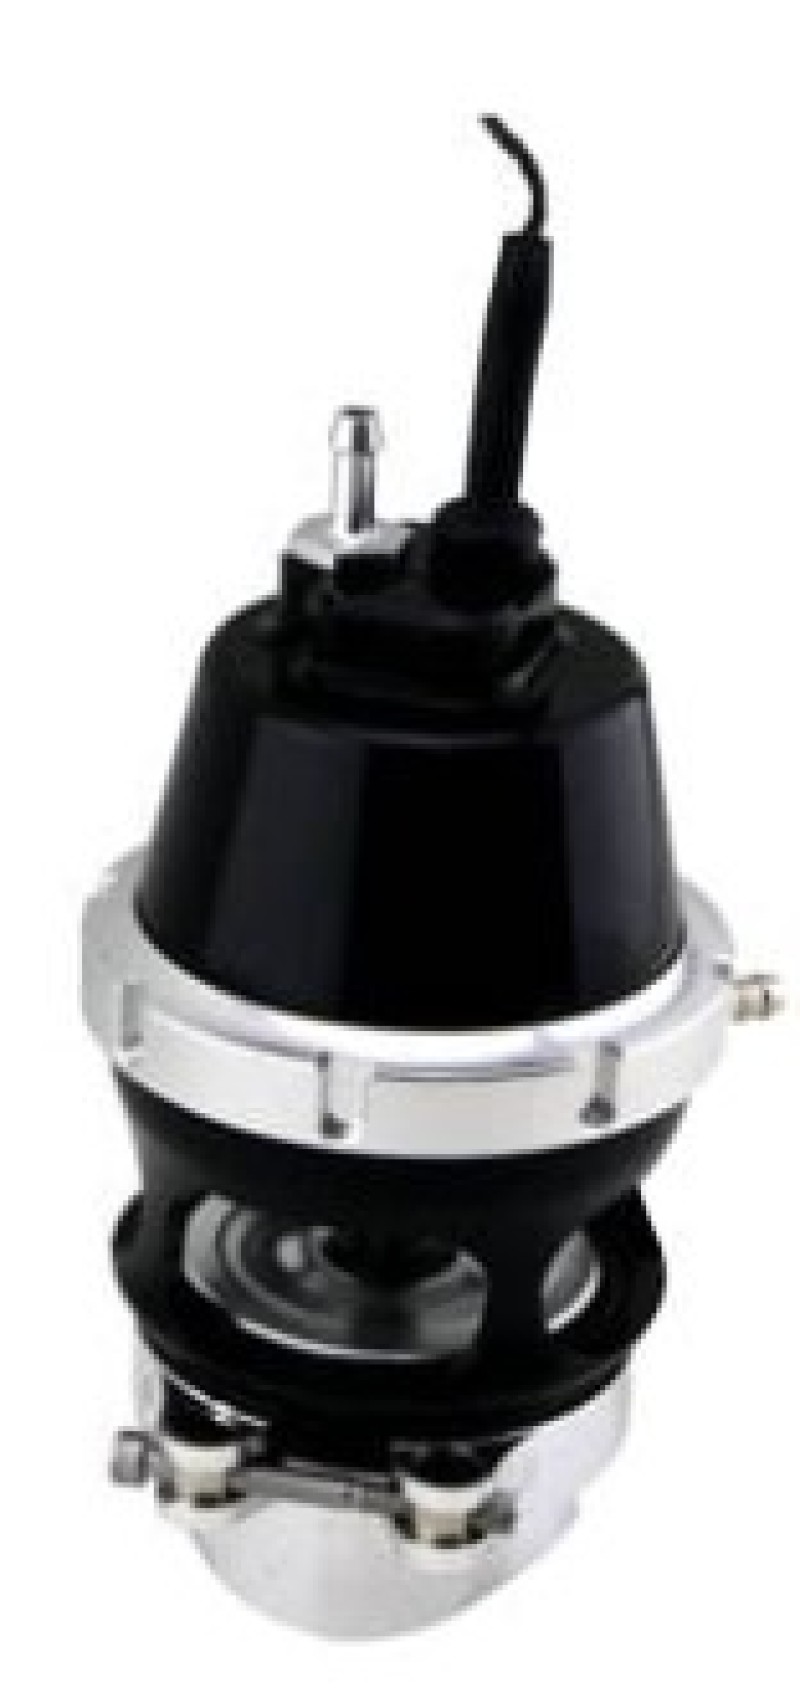 Turbosmart BOV Power Port w/ Sensor Cap - Black - TS-0207-1102